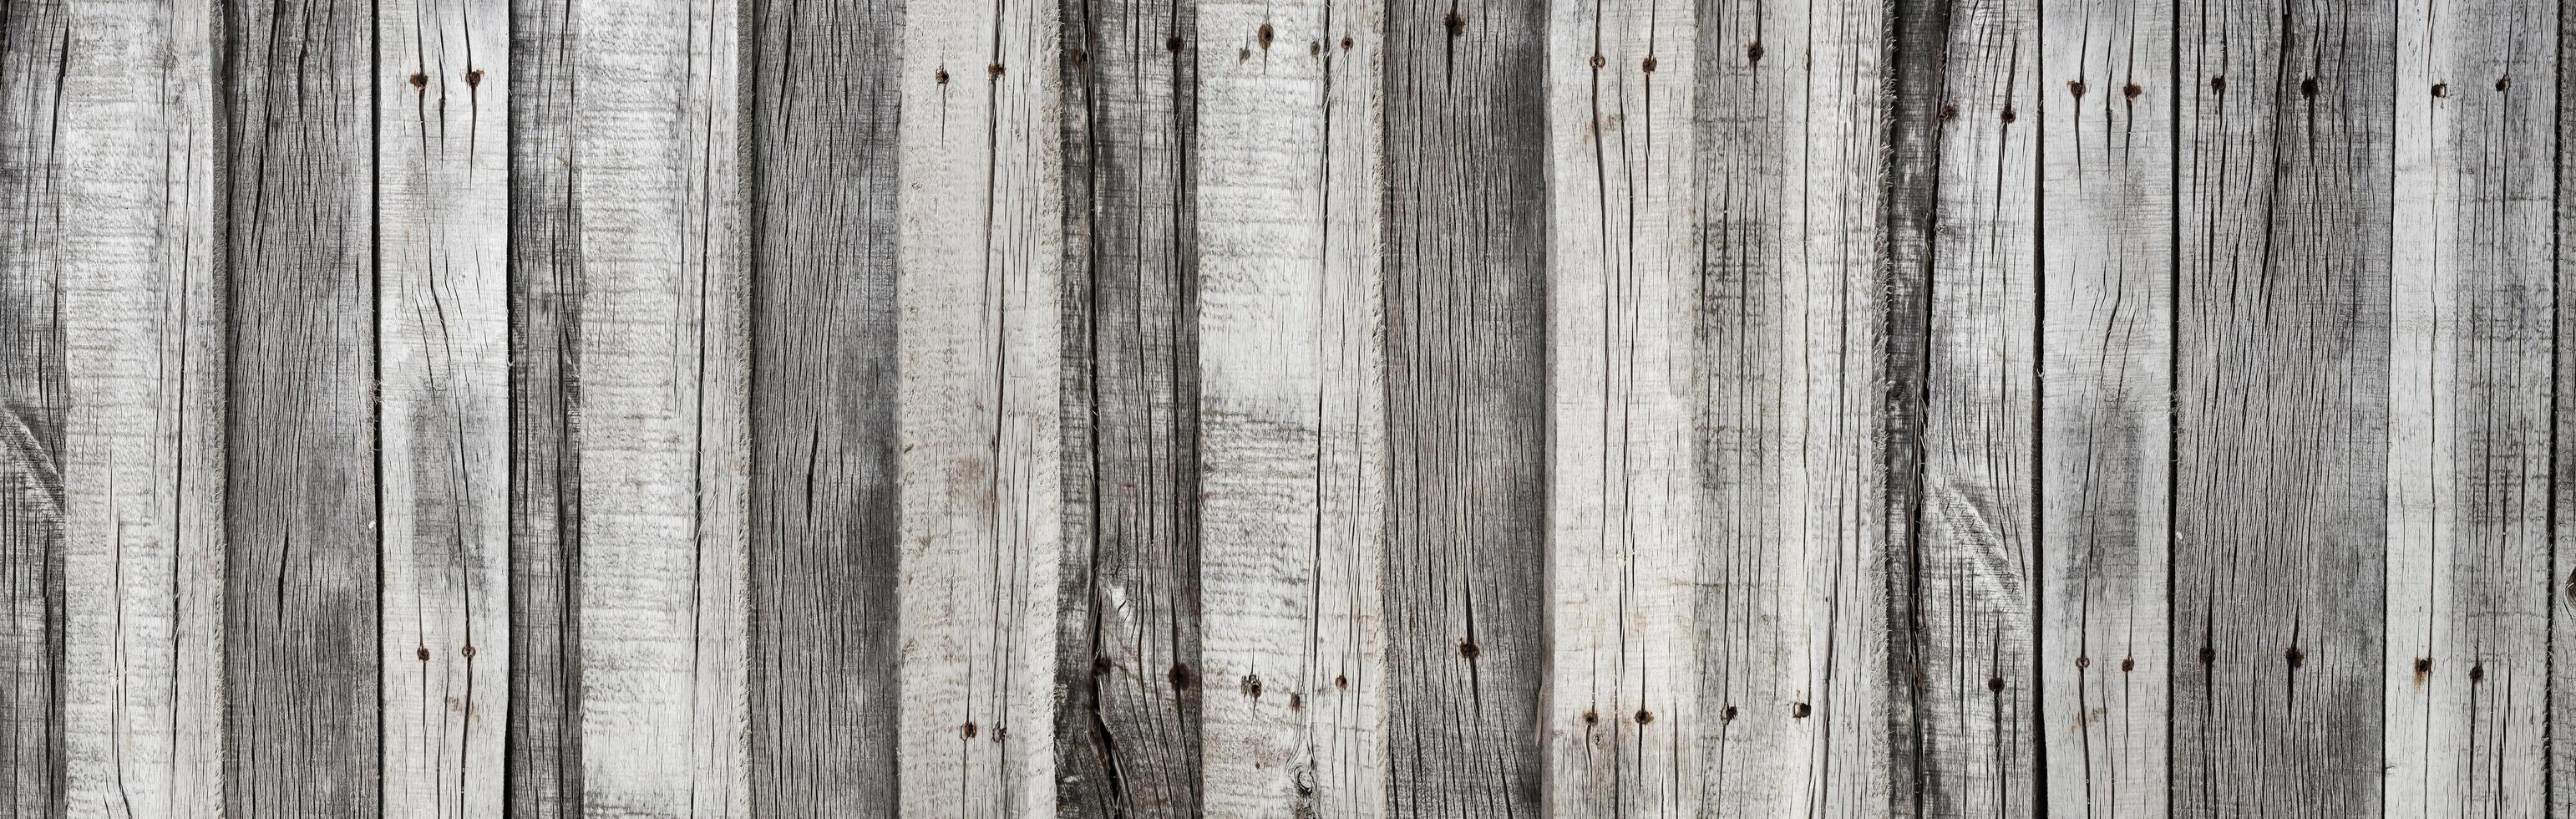 Fondo vertical de textura de tablones grises rústicos de madera foto